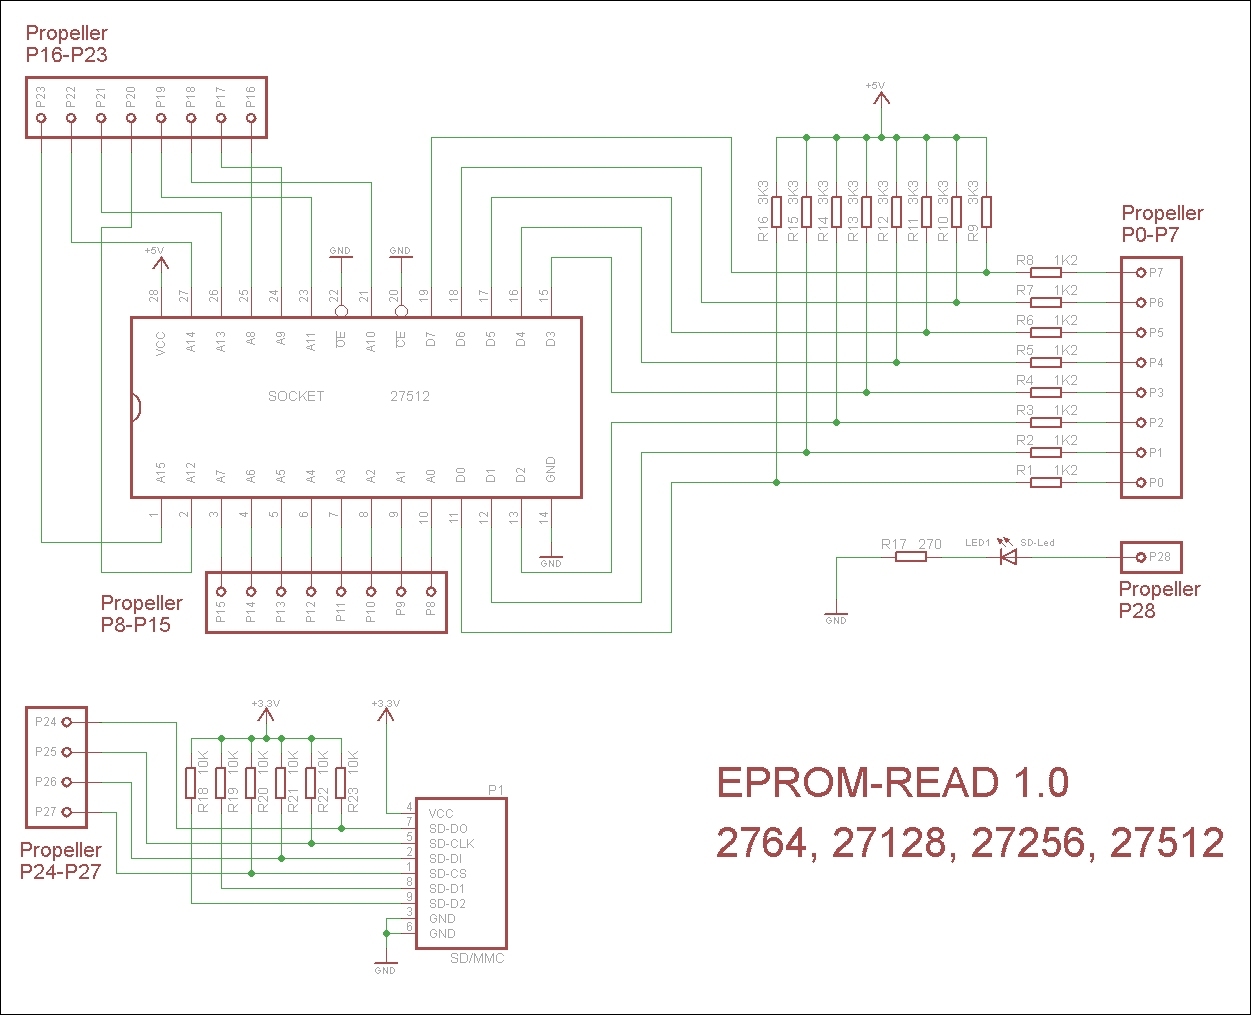 eprom-read_1.0.jpg